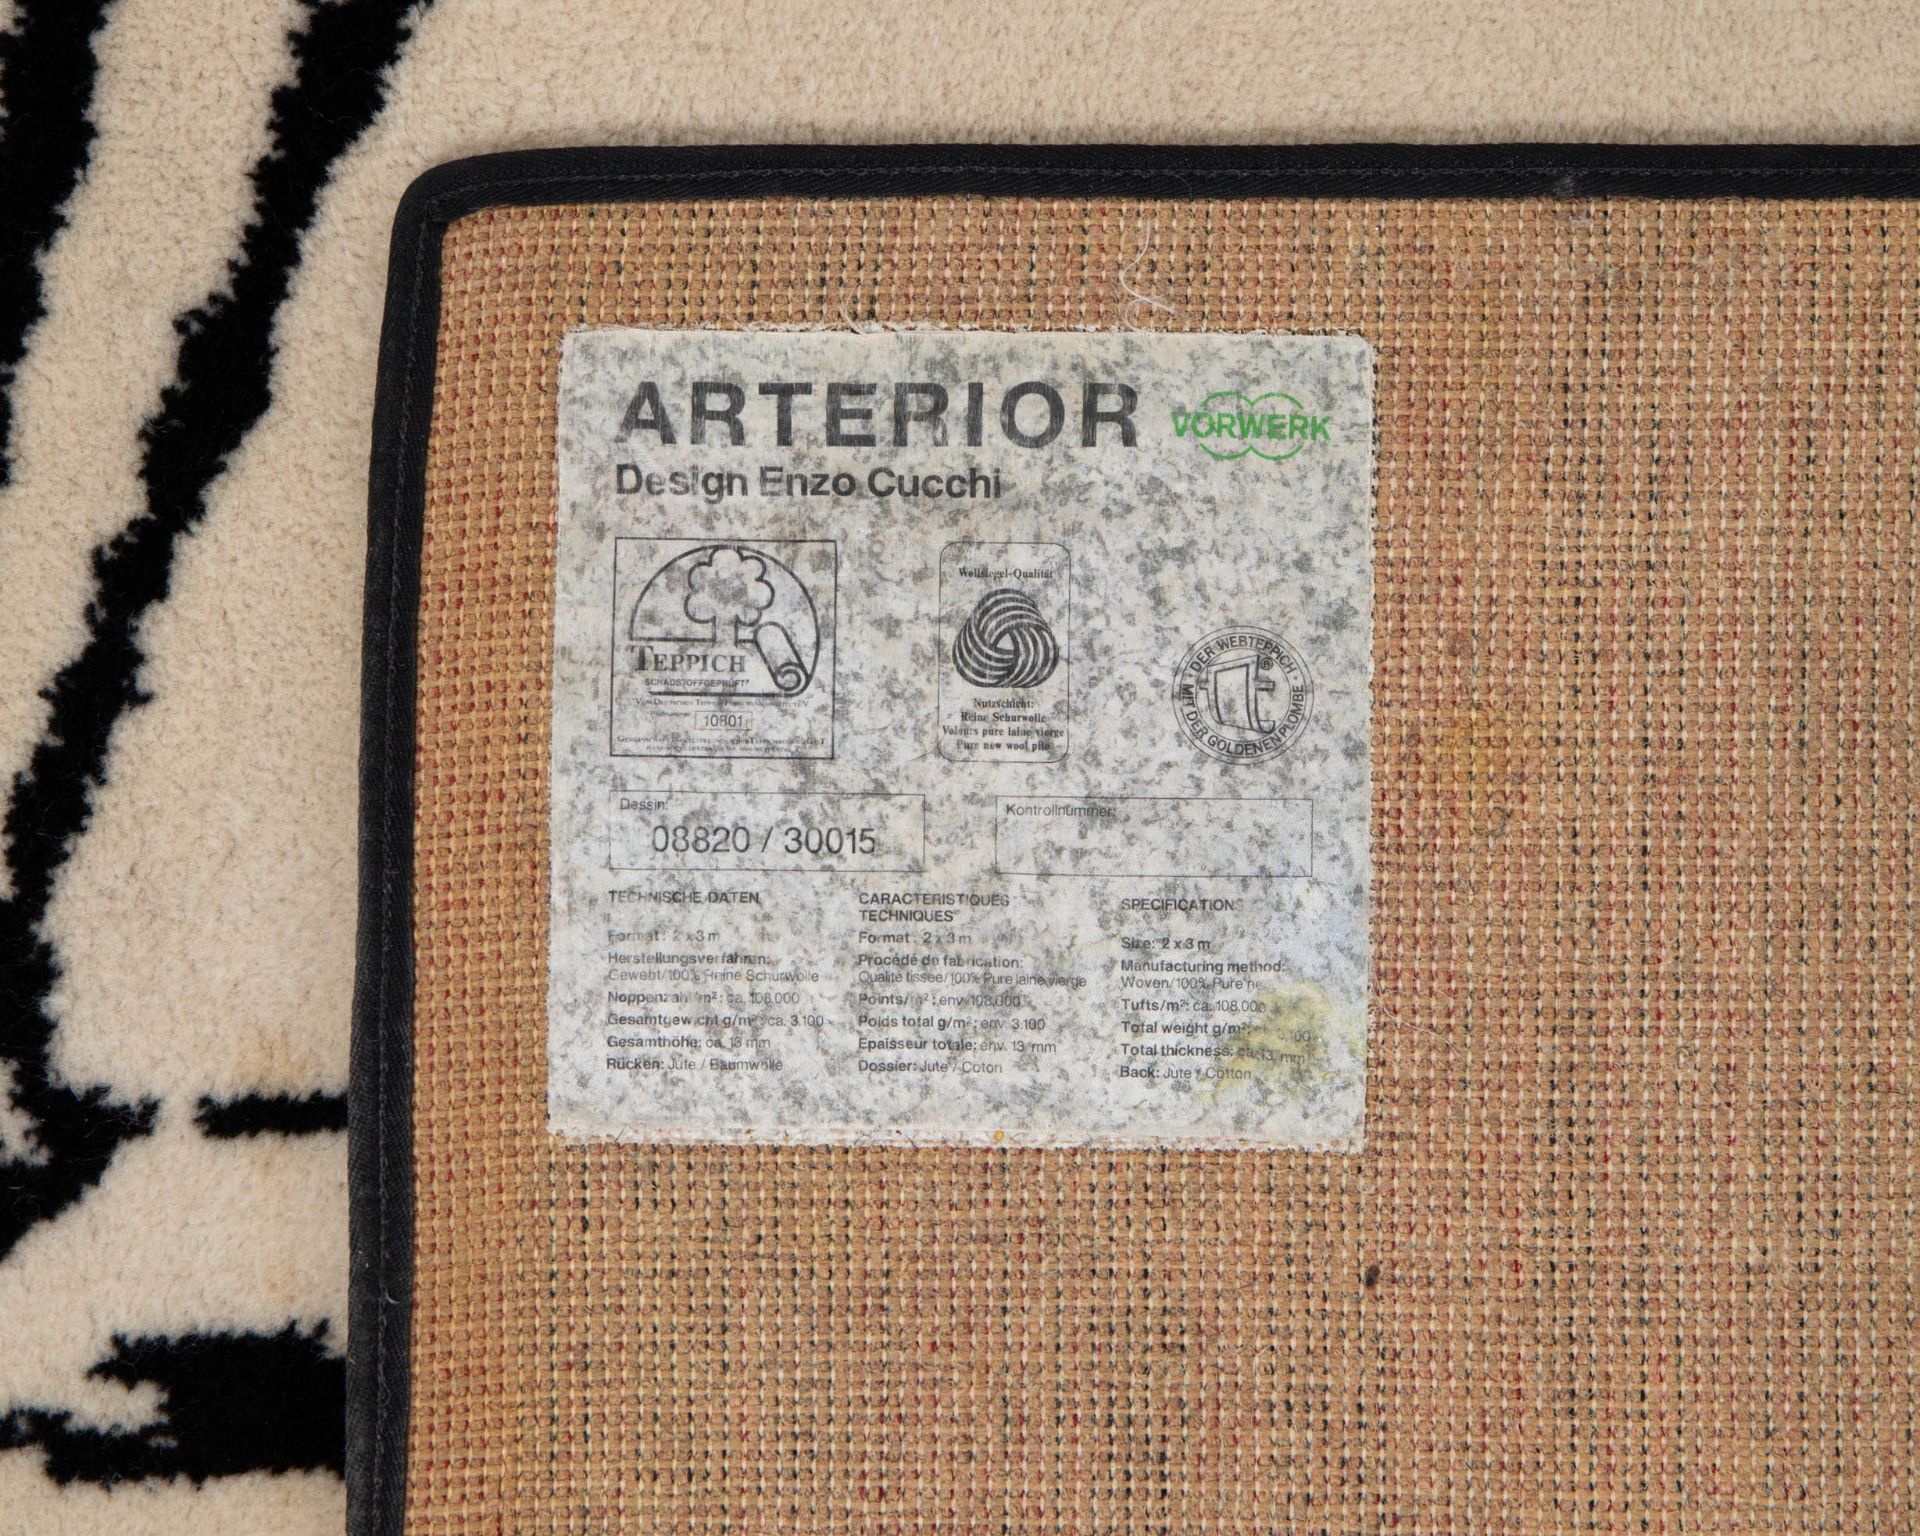 Enzo Cucchi, Vorwerk, Carpet from the Arterior series - Image 4 of 5